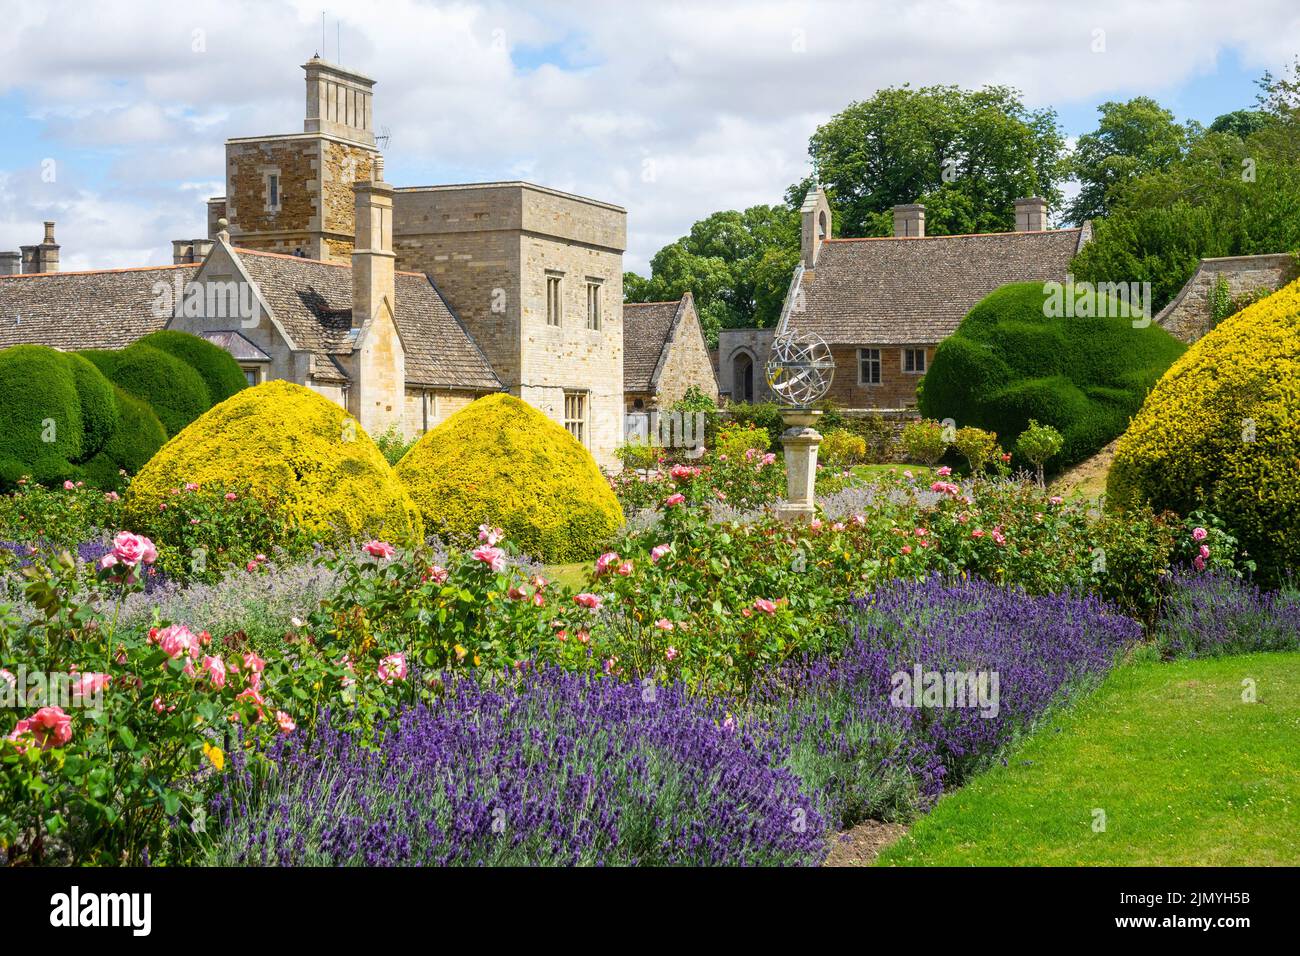 England, Northamptonshire, Rockingham castle gardens Stock Photo